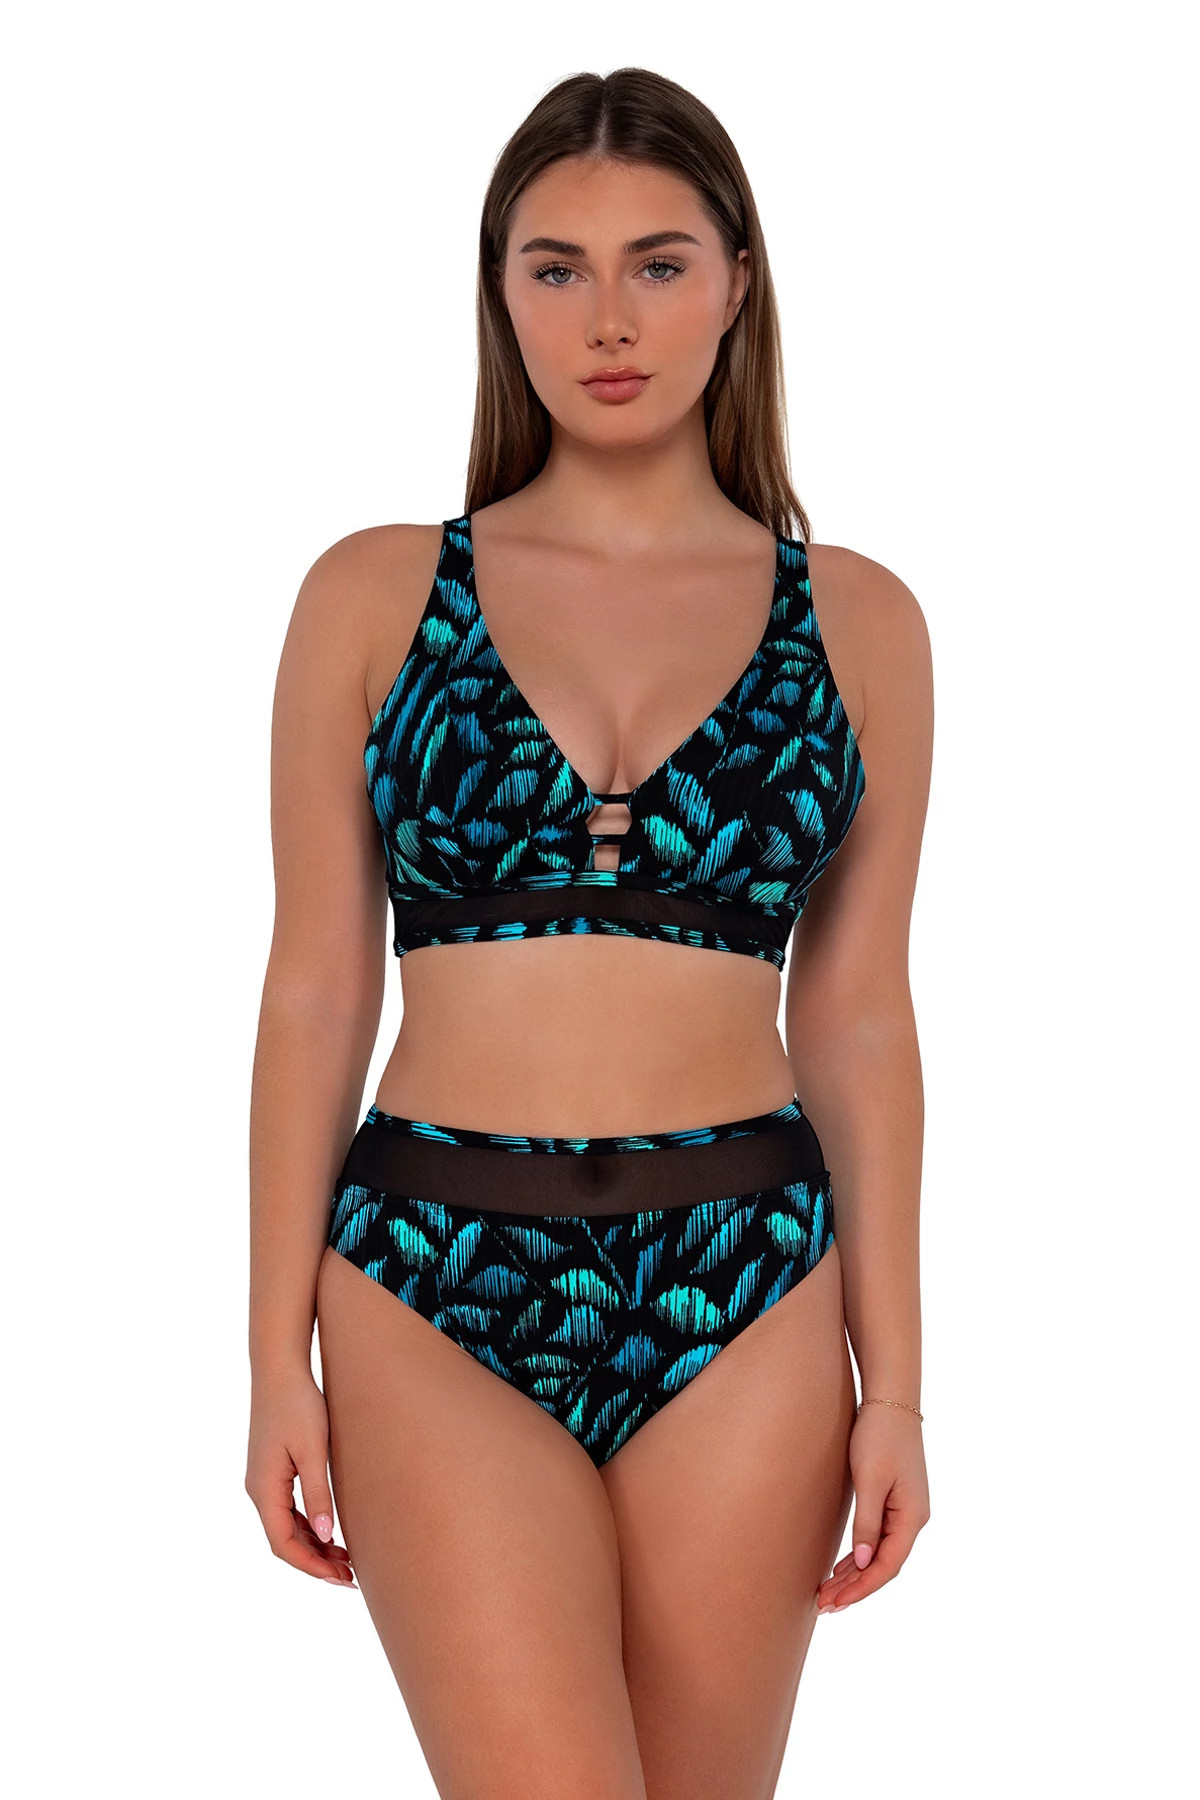 CASCADE SEAGRASS TEXTURE Danica Underwire Bikini Top (E-H Cup) image number 1